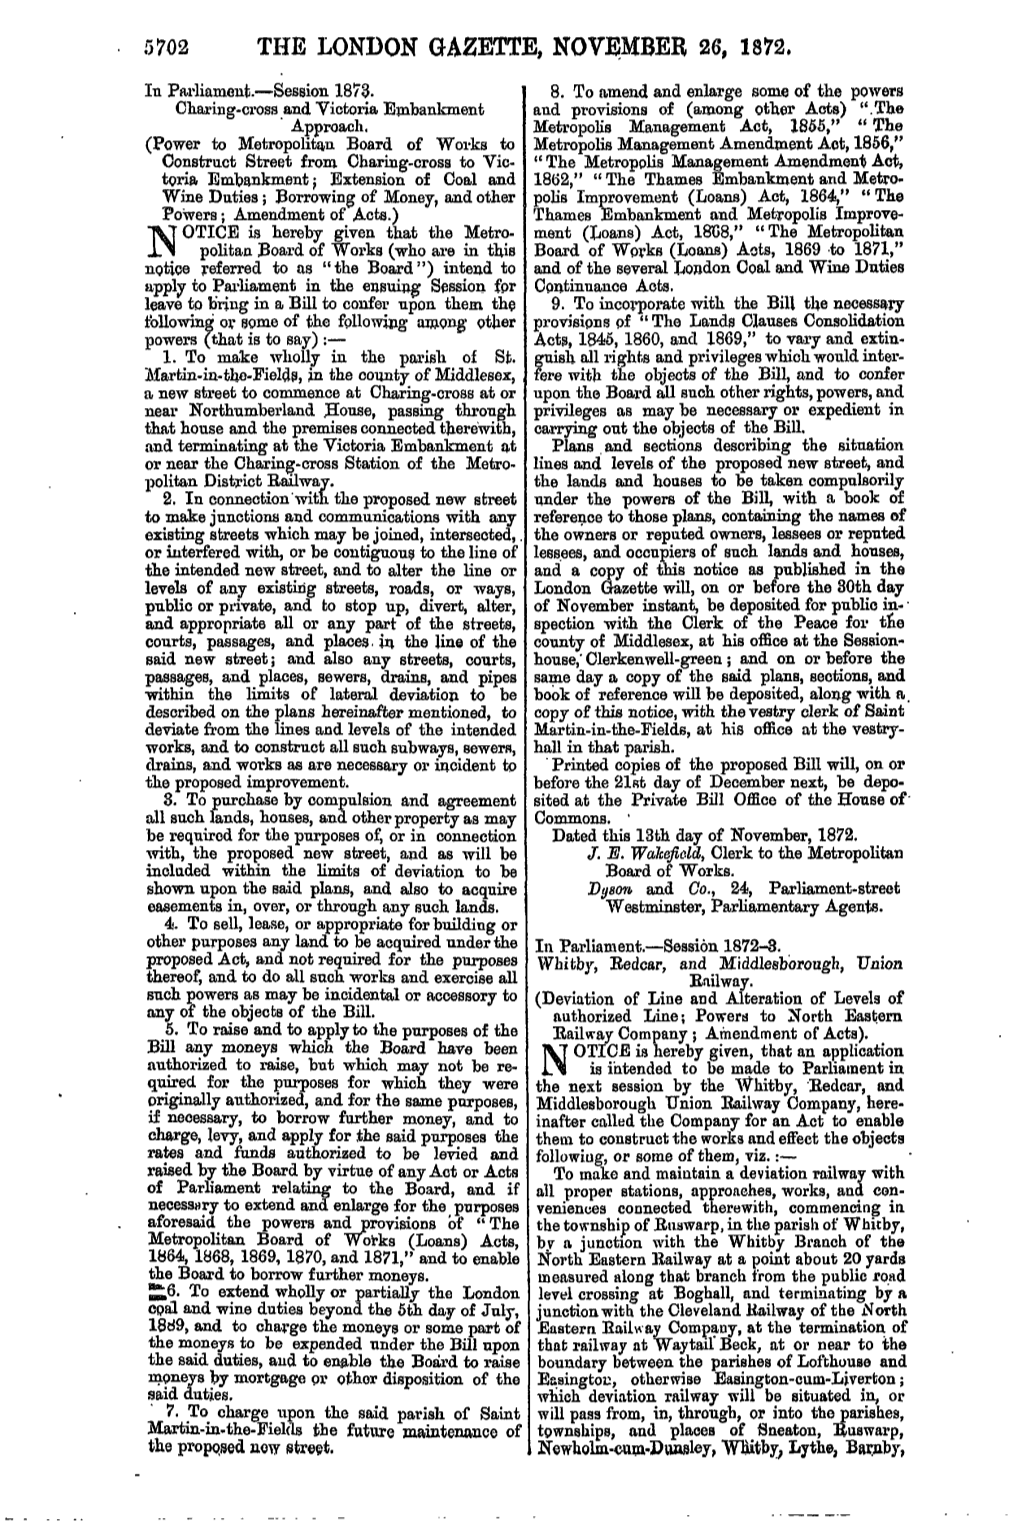 The London Gazette, November 26, 1872